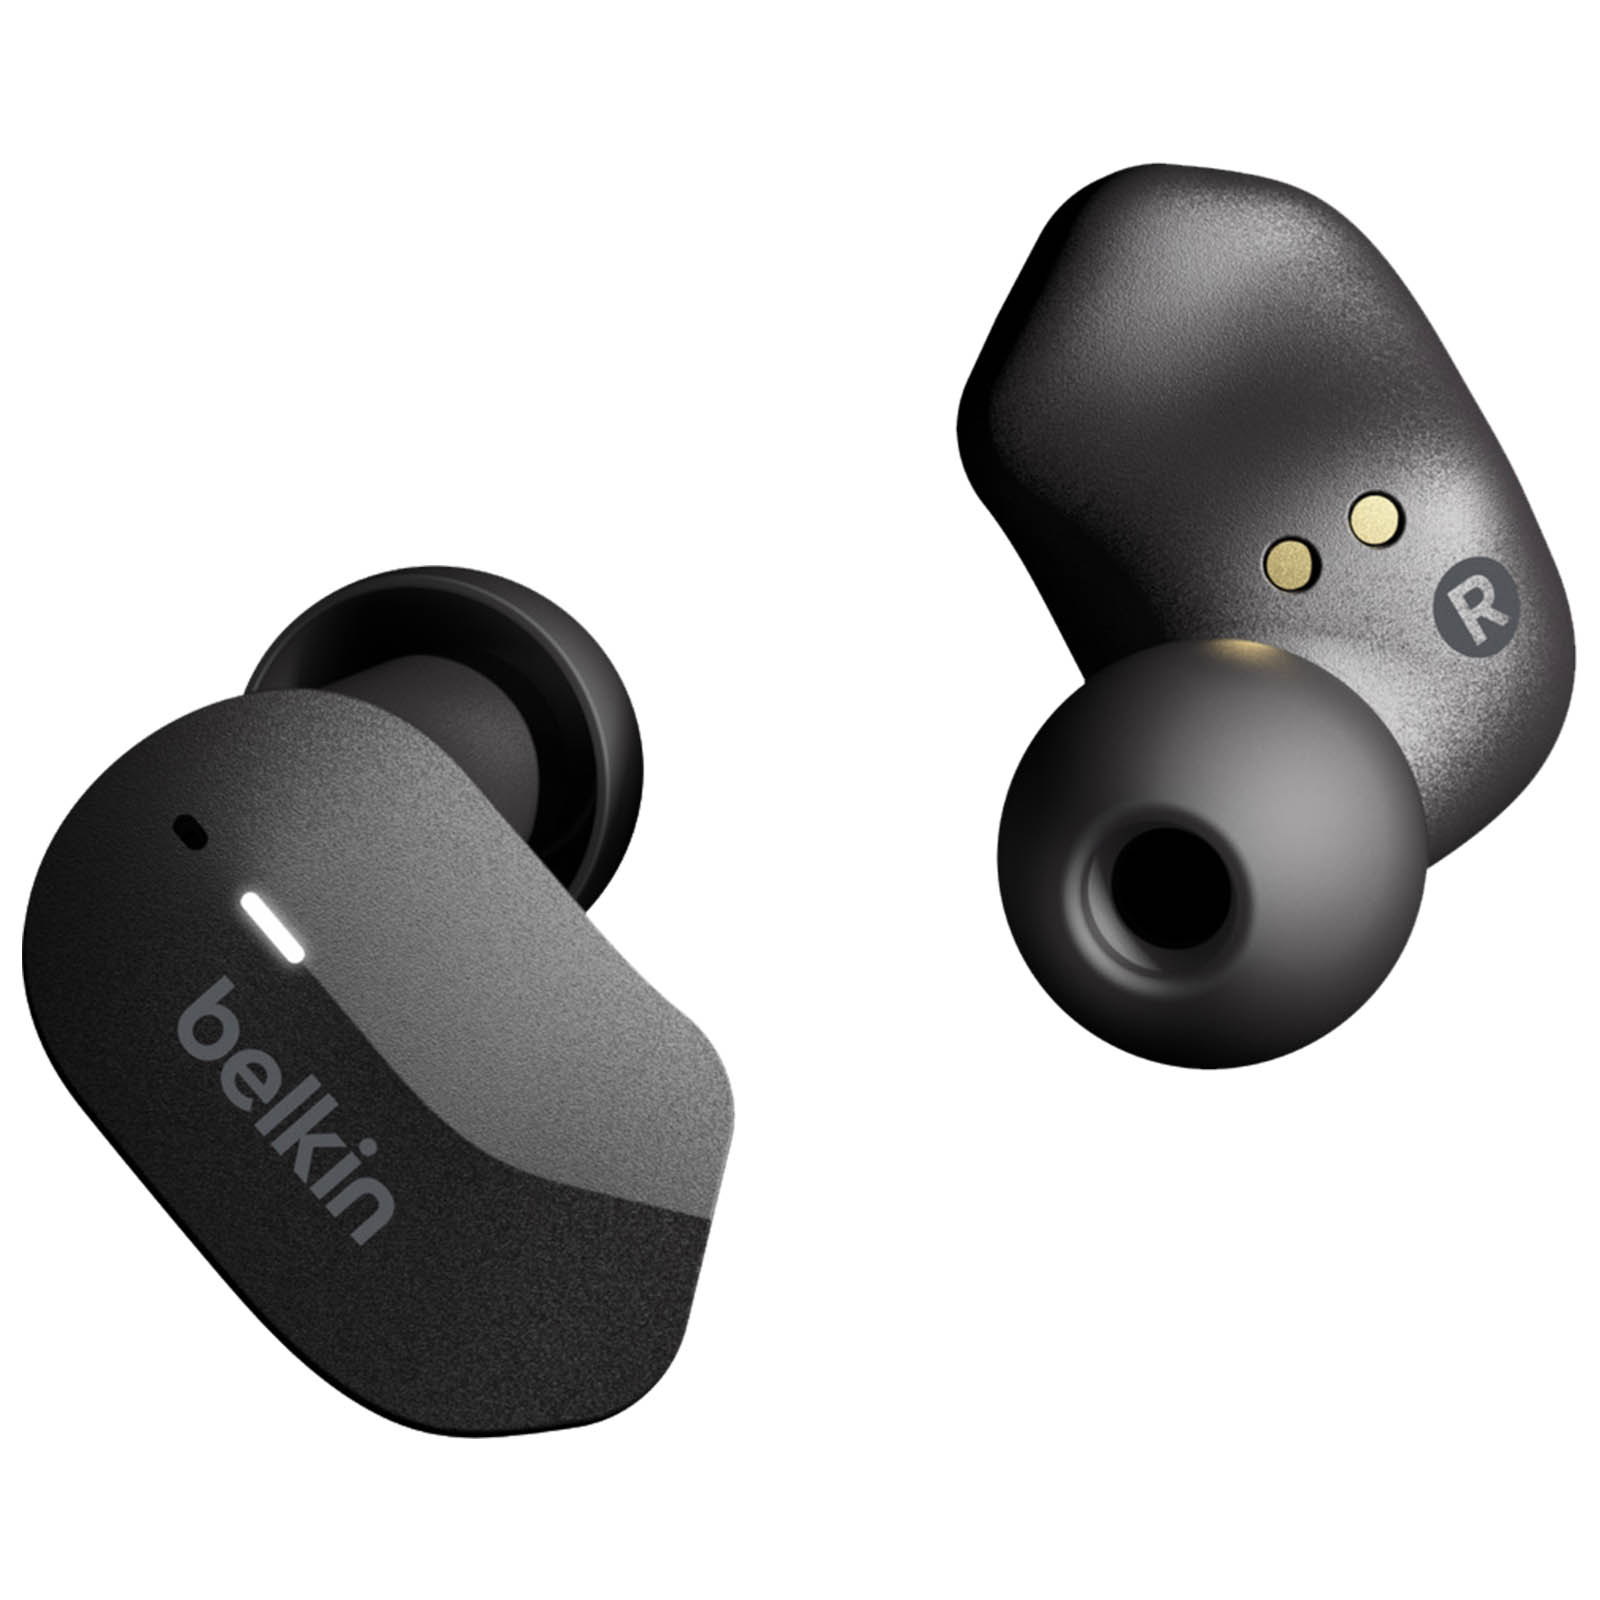 Bluetooth-Kopfhörer in-ear SOUNDFORM BELKIN Sport Kopfhörer Bluetooth